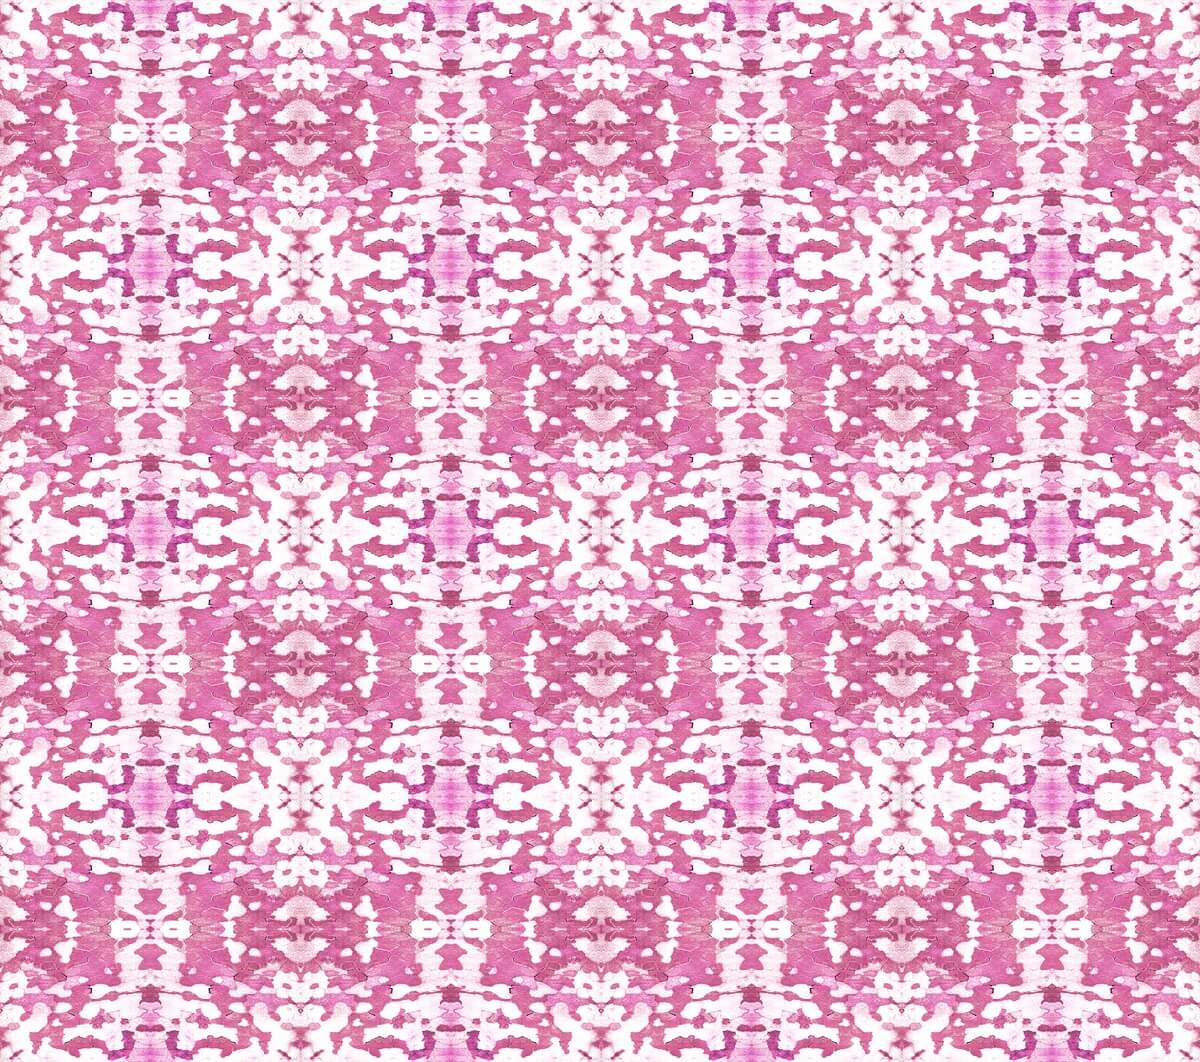 Park Bark pattern in pink